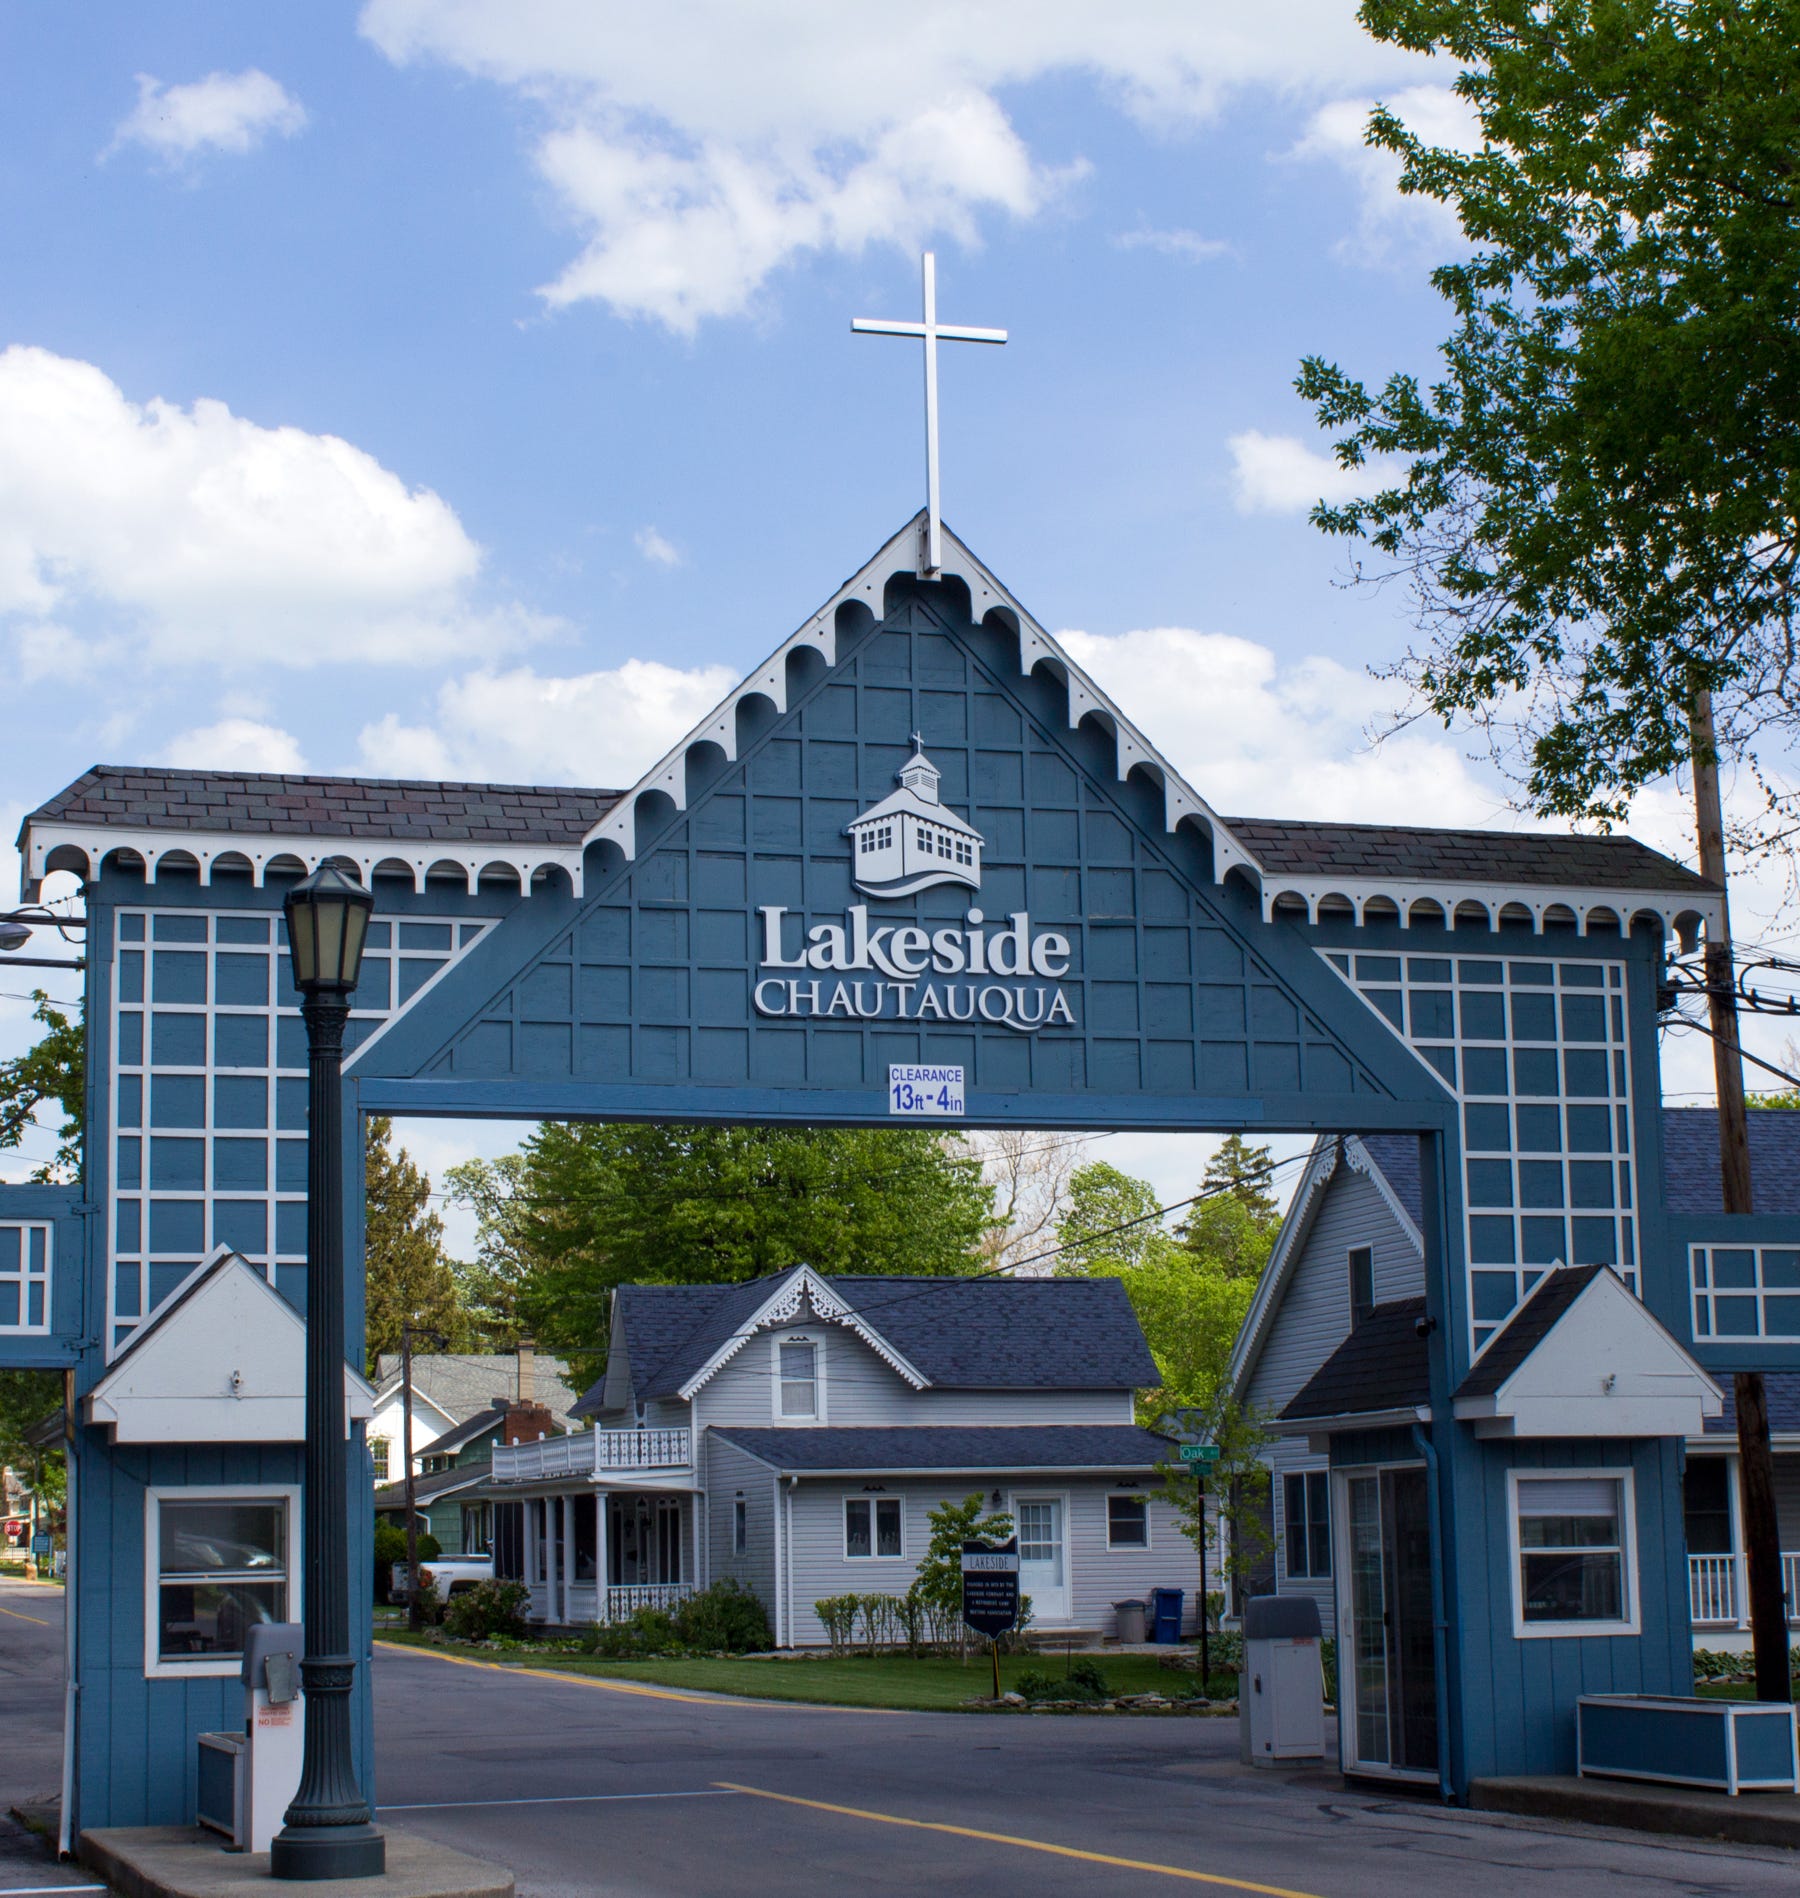 Lakeside Chautauqua, Ohio: A place to renew the body, mind and spirit